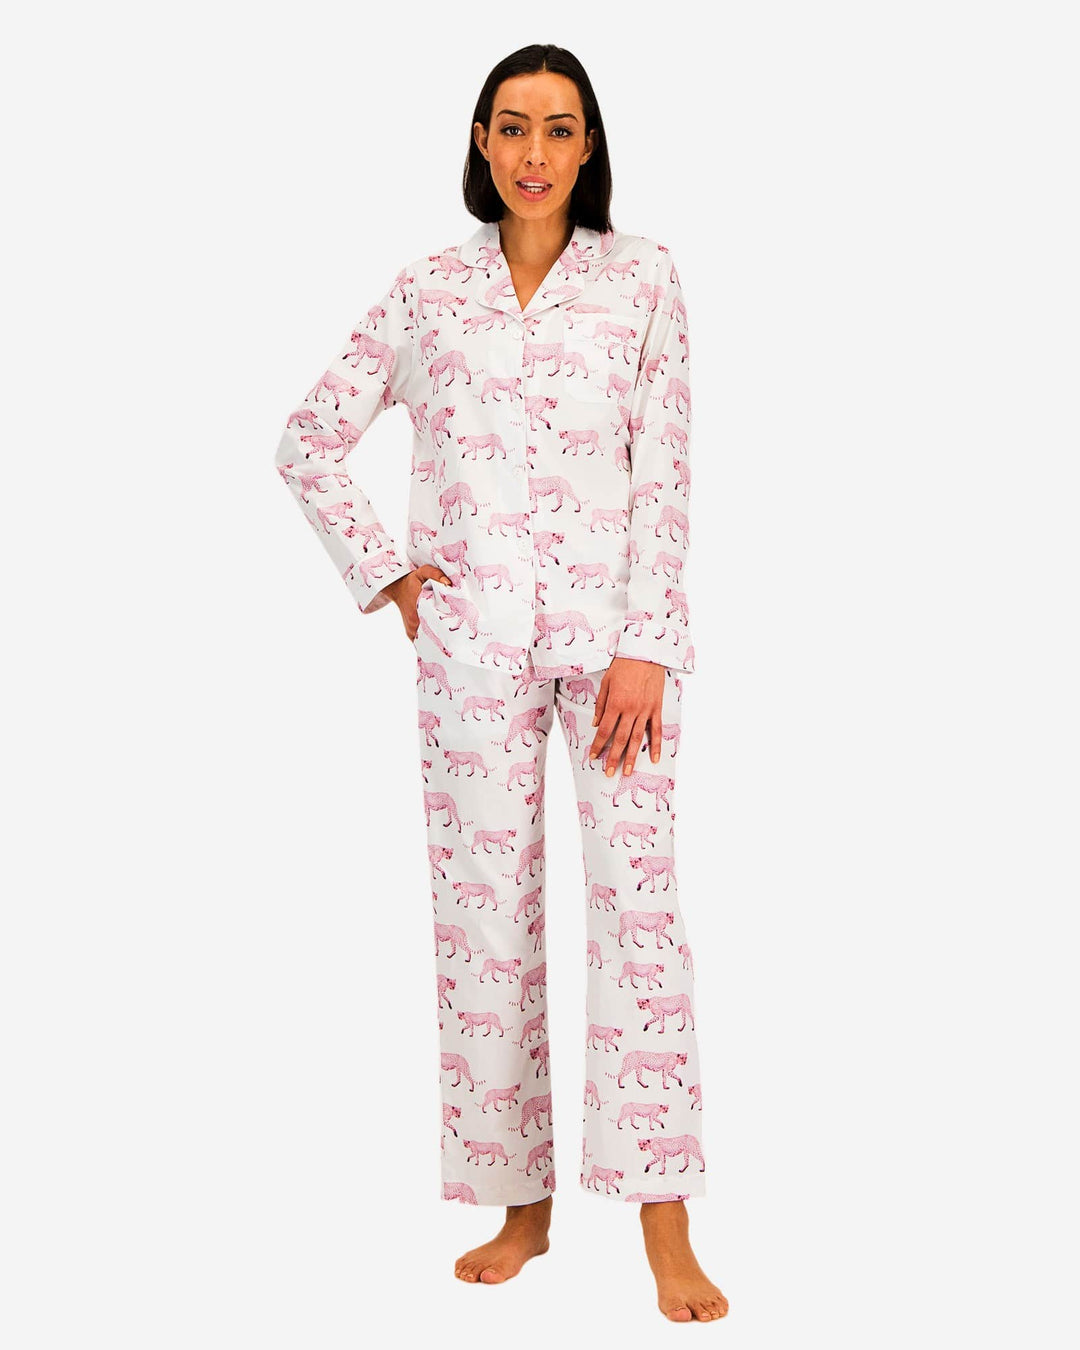 Womens cotton pyjamas set - Pink cheetah on white